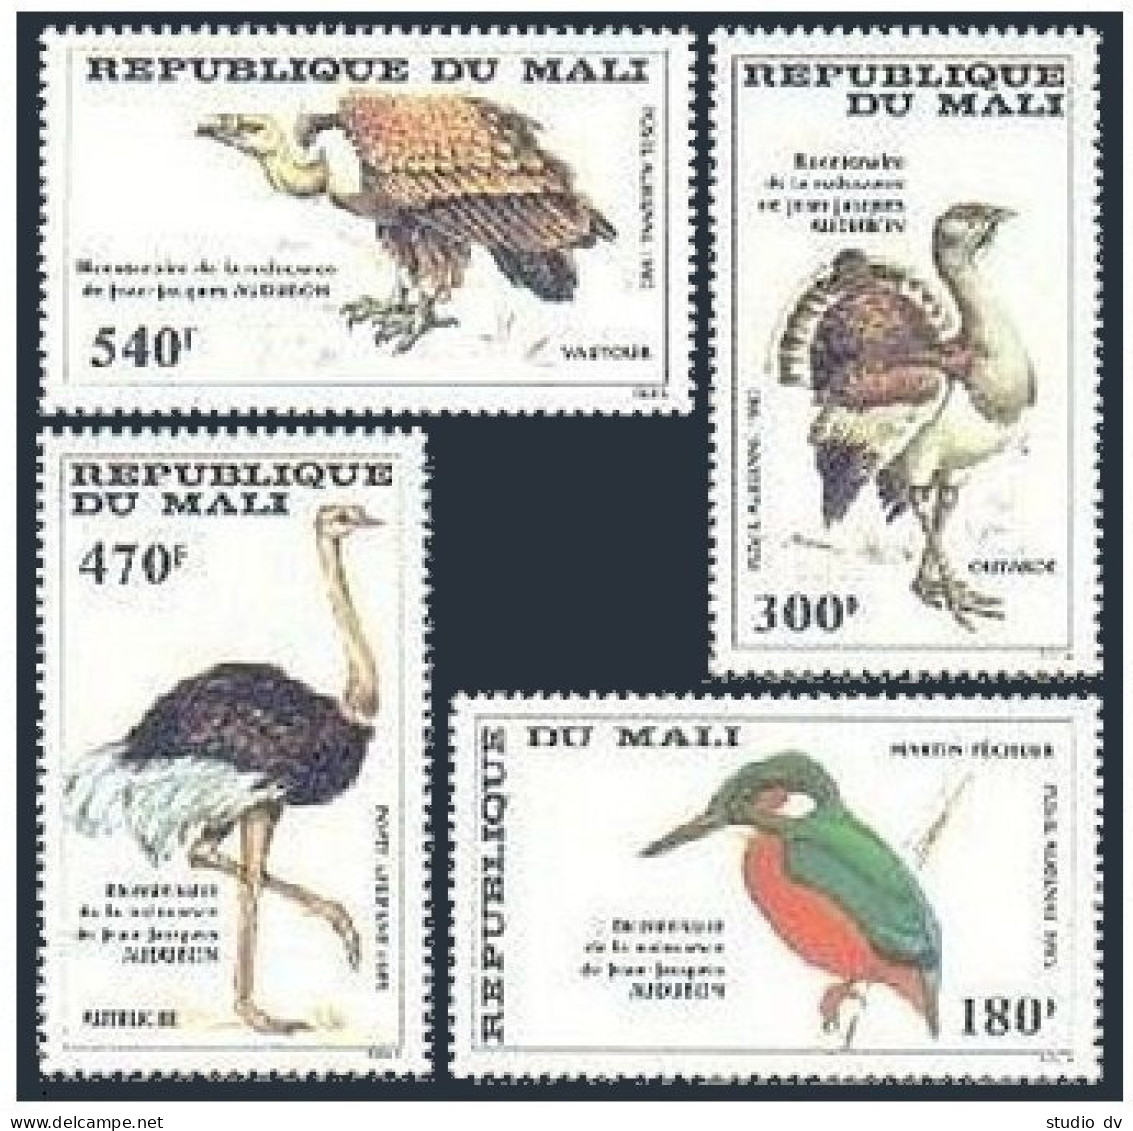 Mali C512-C515, MNH. Michel 1046-1049. Audubon's Birds,1985. Kingfisher,Bustard, - Mali (1959-...)